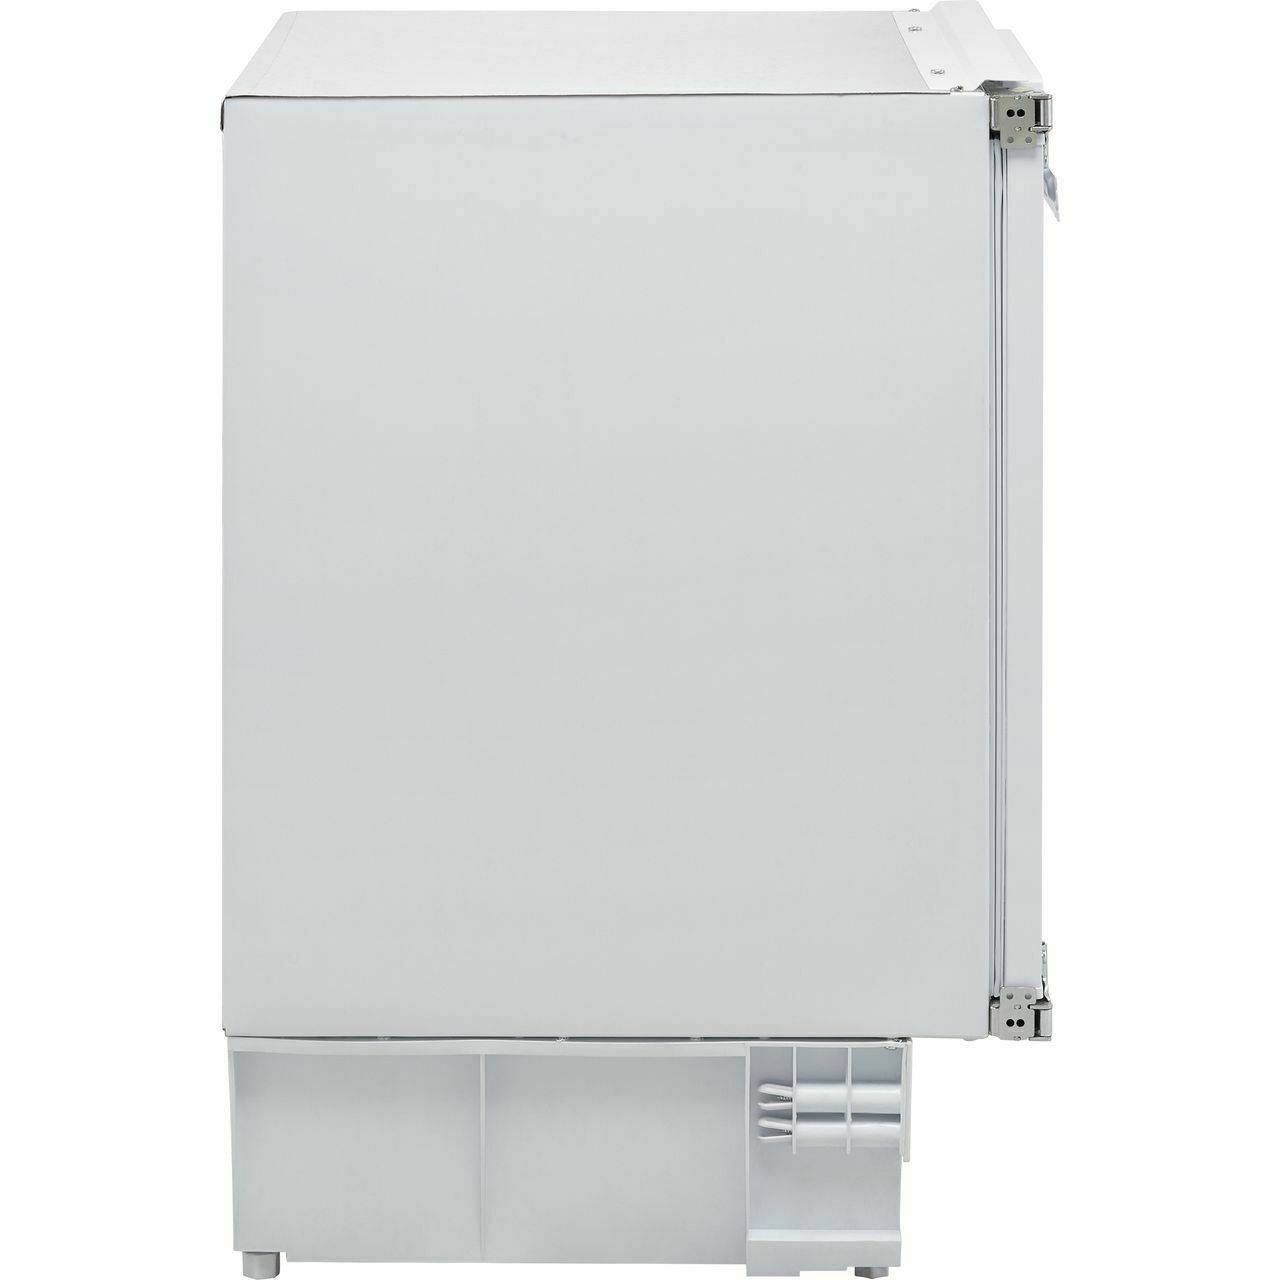 Candy CFU 135 NEK/N Integrated Under Counter Freezer White 9185